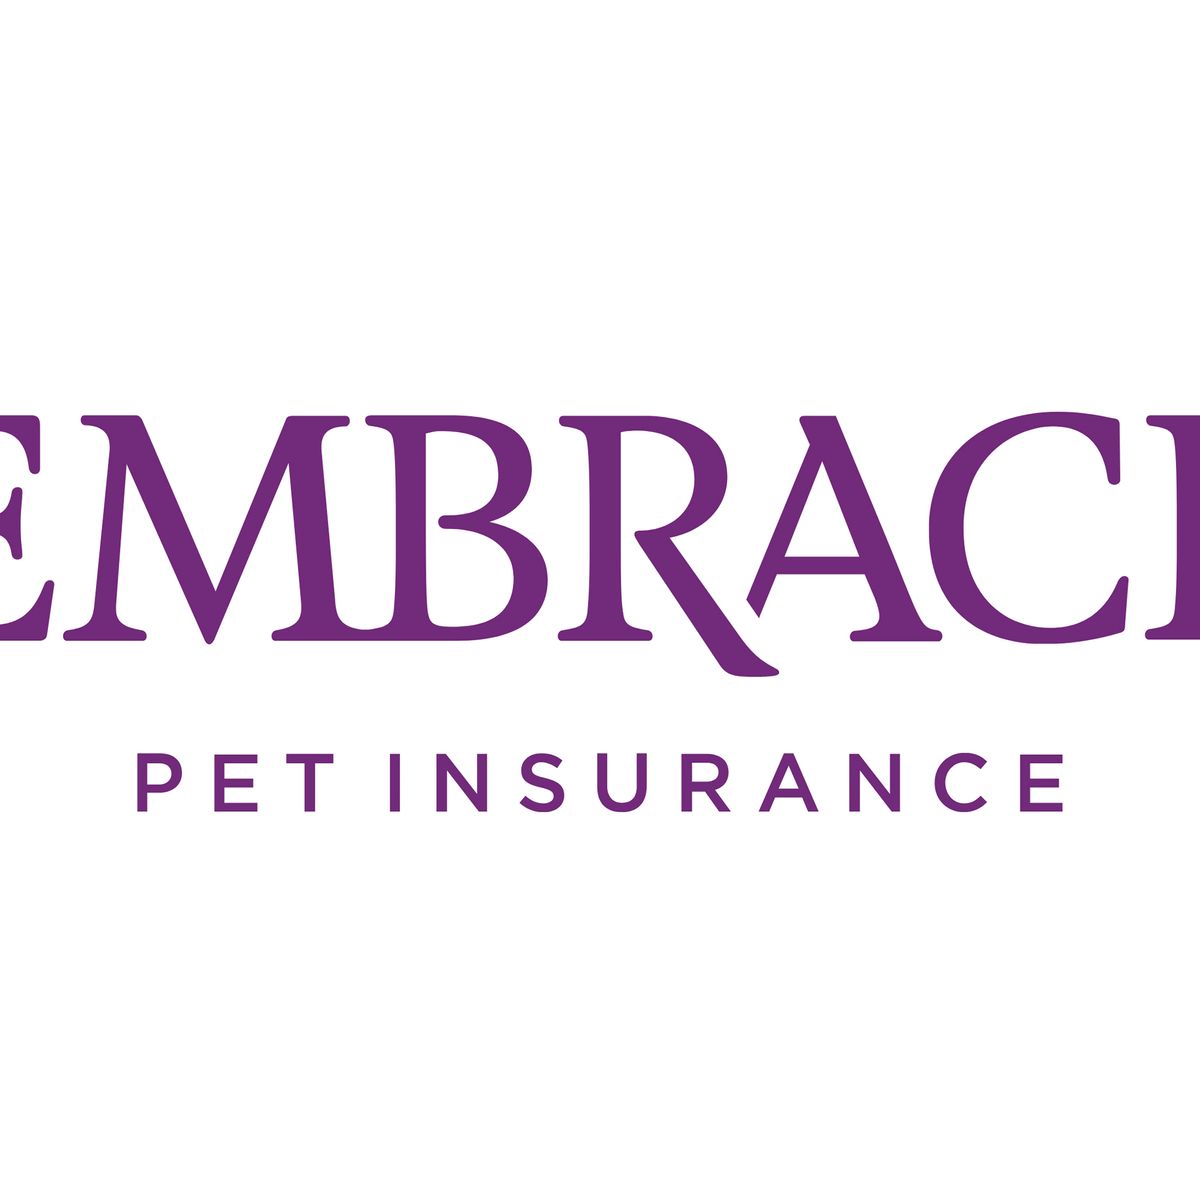 7 Best Pet Insurance Companies 2020 The Strategist New York Magazine